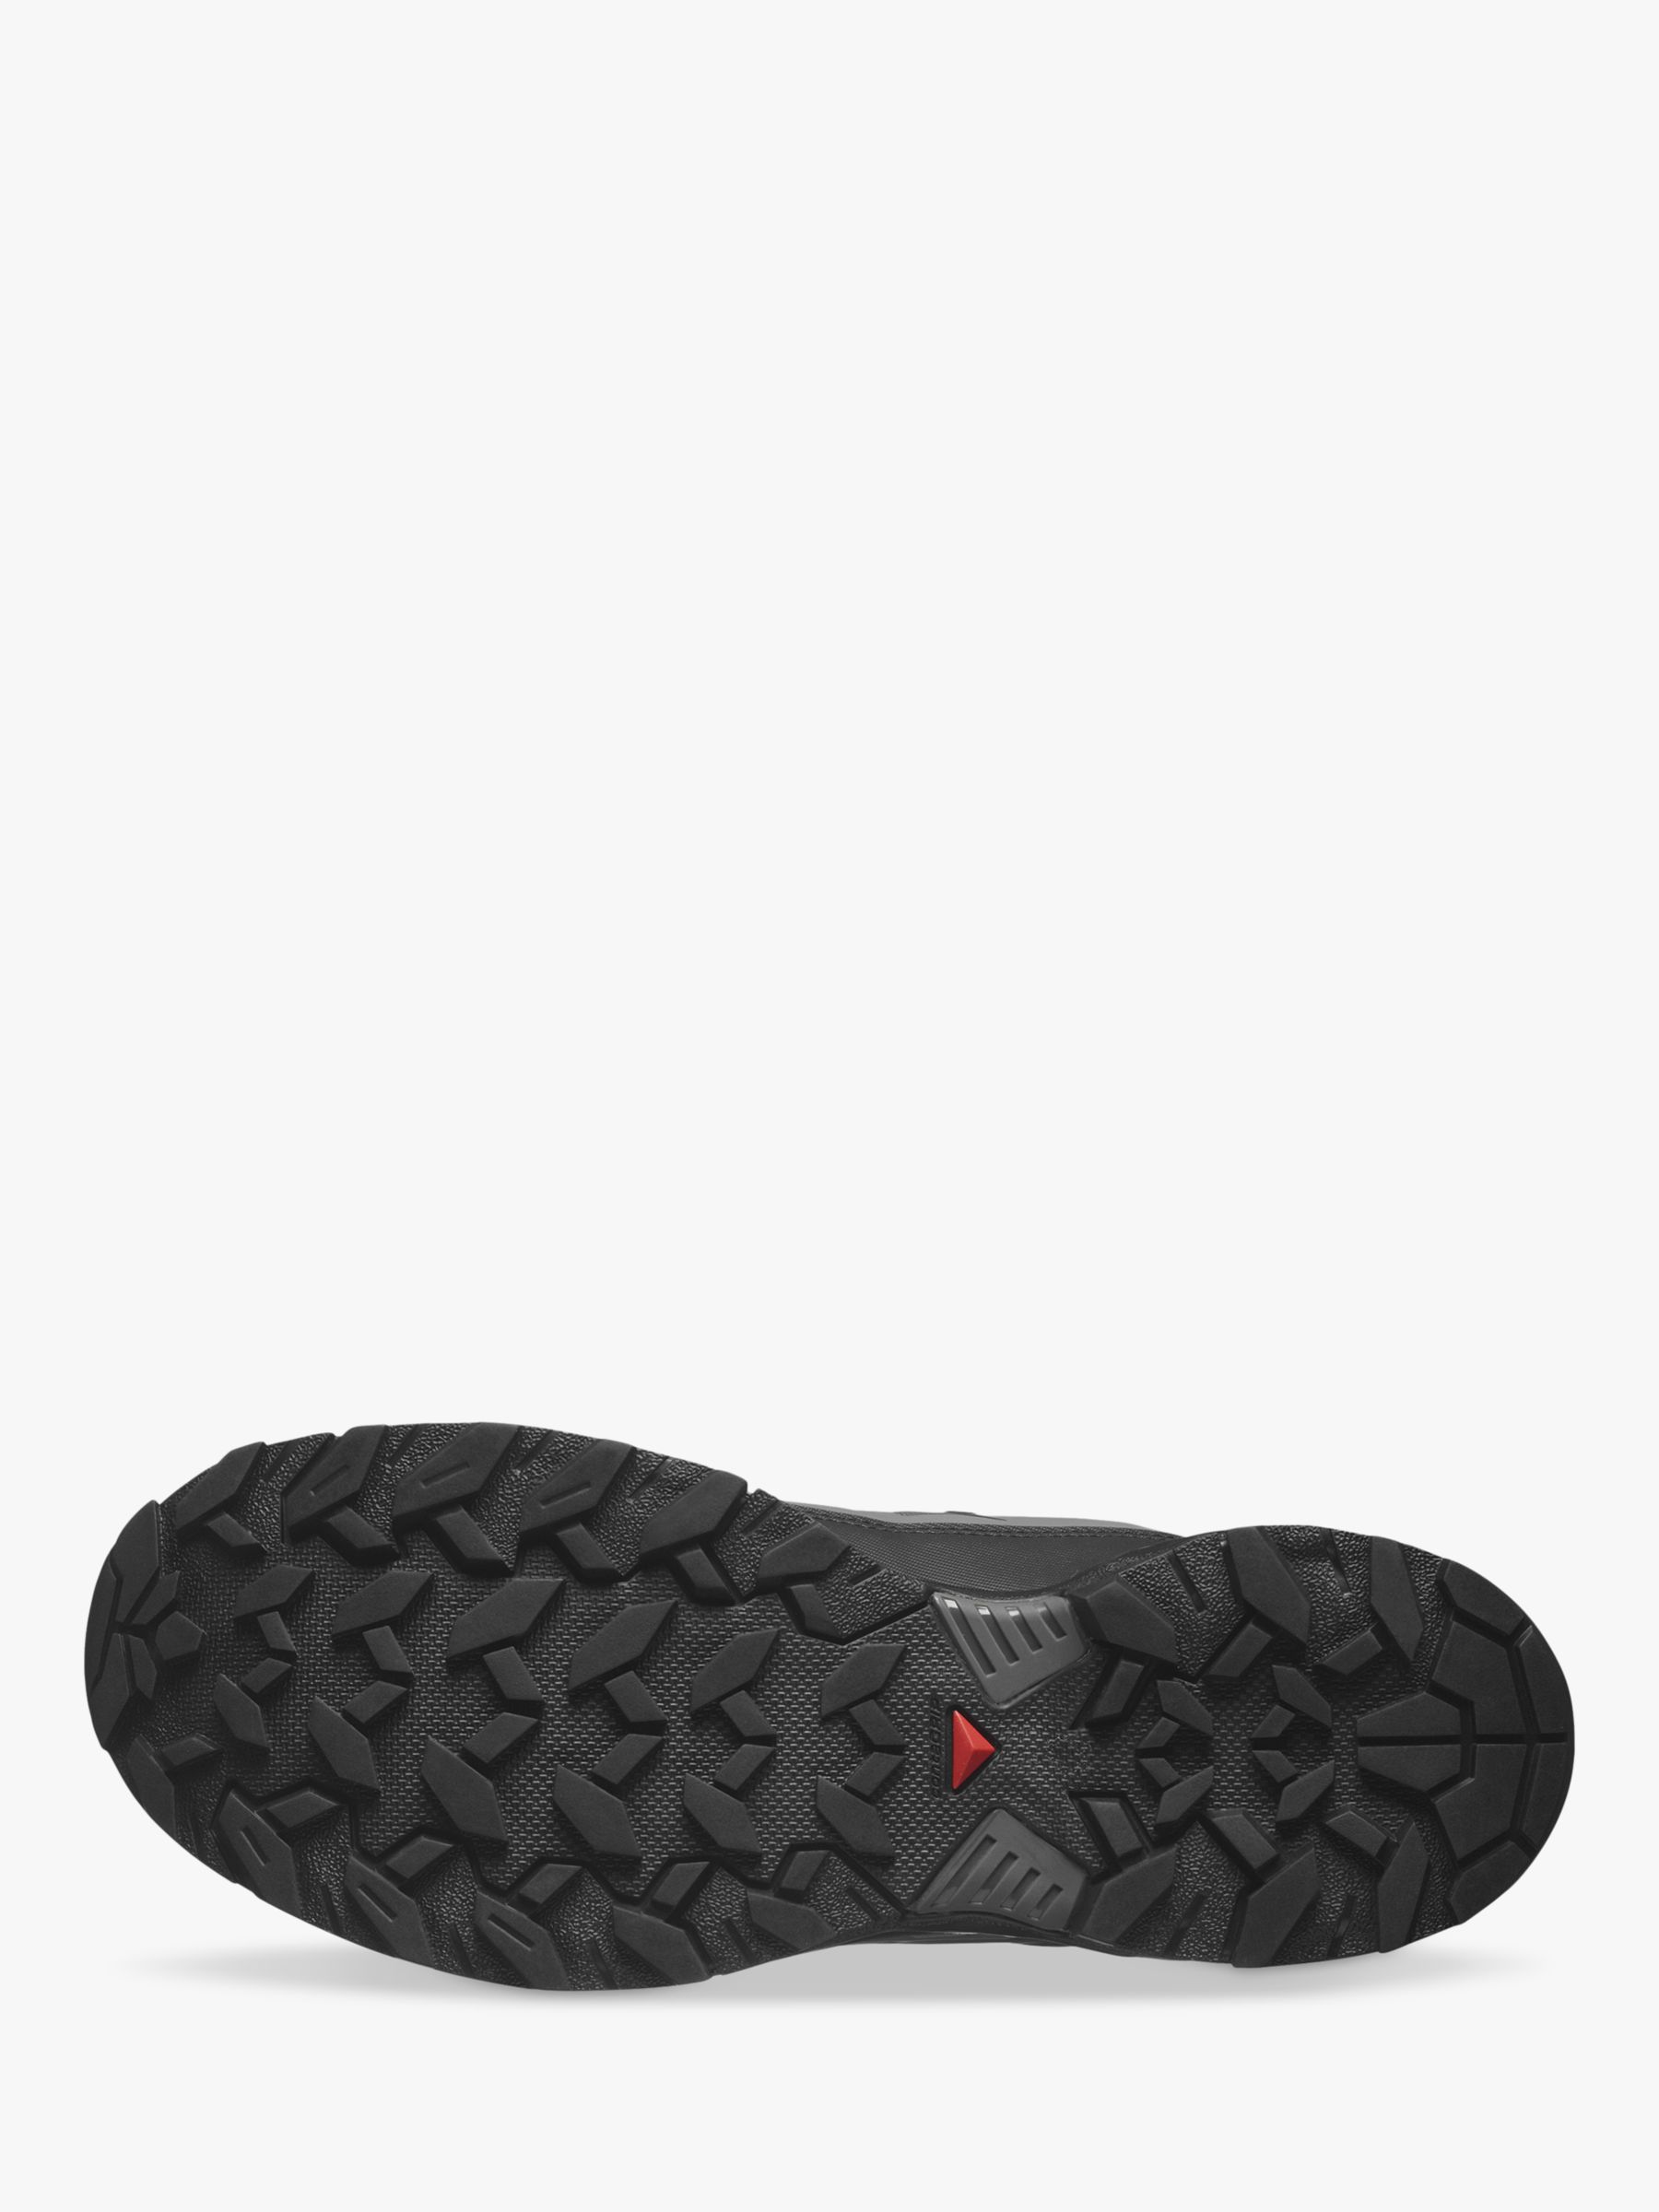 Salomon X Ultra 360 Men's Hiking Shoes, Magnet/Black, 9